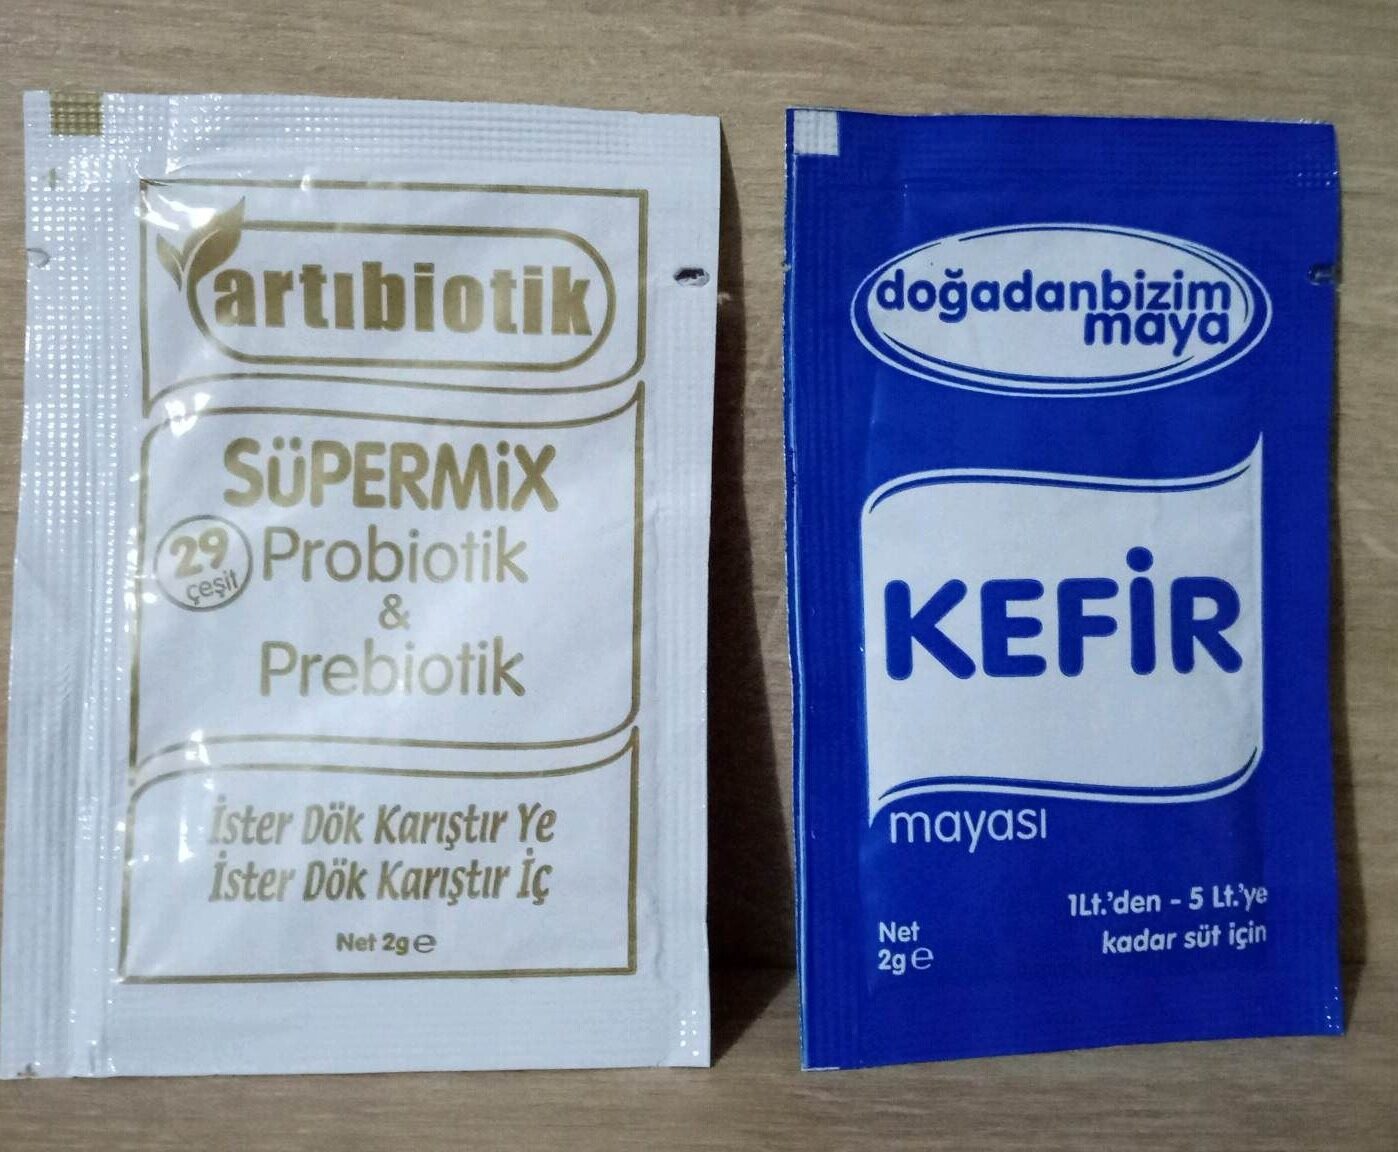 kefir คีเฟอร์ Supermix Probiotic & Prebiotic ฟรีซดรายจากตุรกี ขนาด 2 GR (1 ซอง ต่อนม 1- 5 ลิตร) (เซตคู่ ซองสีขาวและซองสีฟ้า)